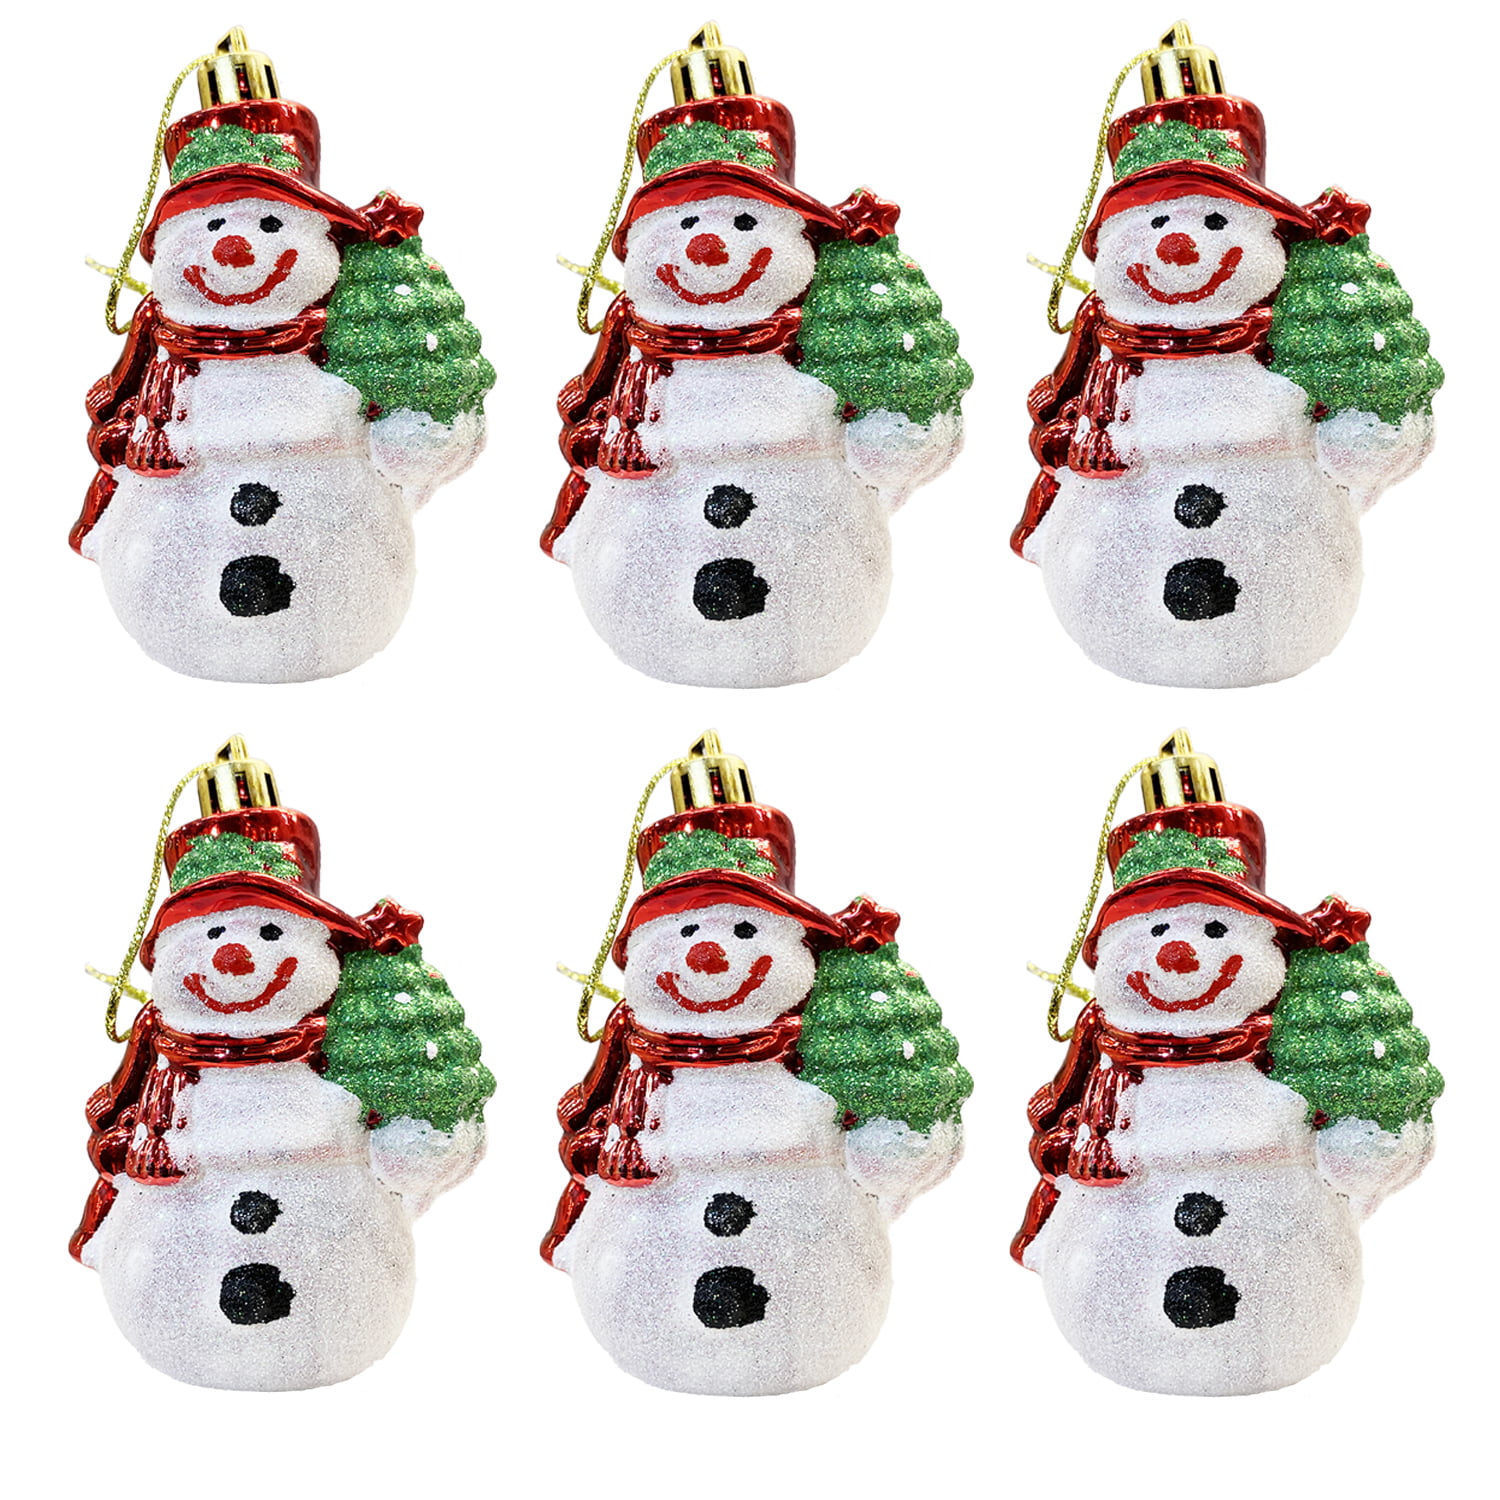 4Pcs Christmas Ornaments Gift Santa Claus Snowman Reindeer Toy Doll Hang Deco US 